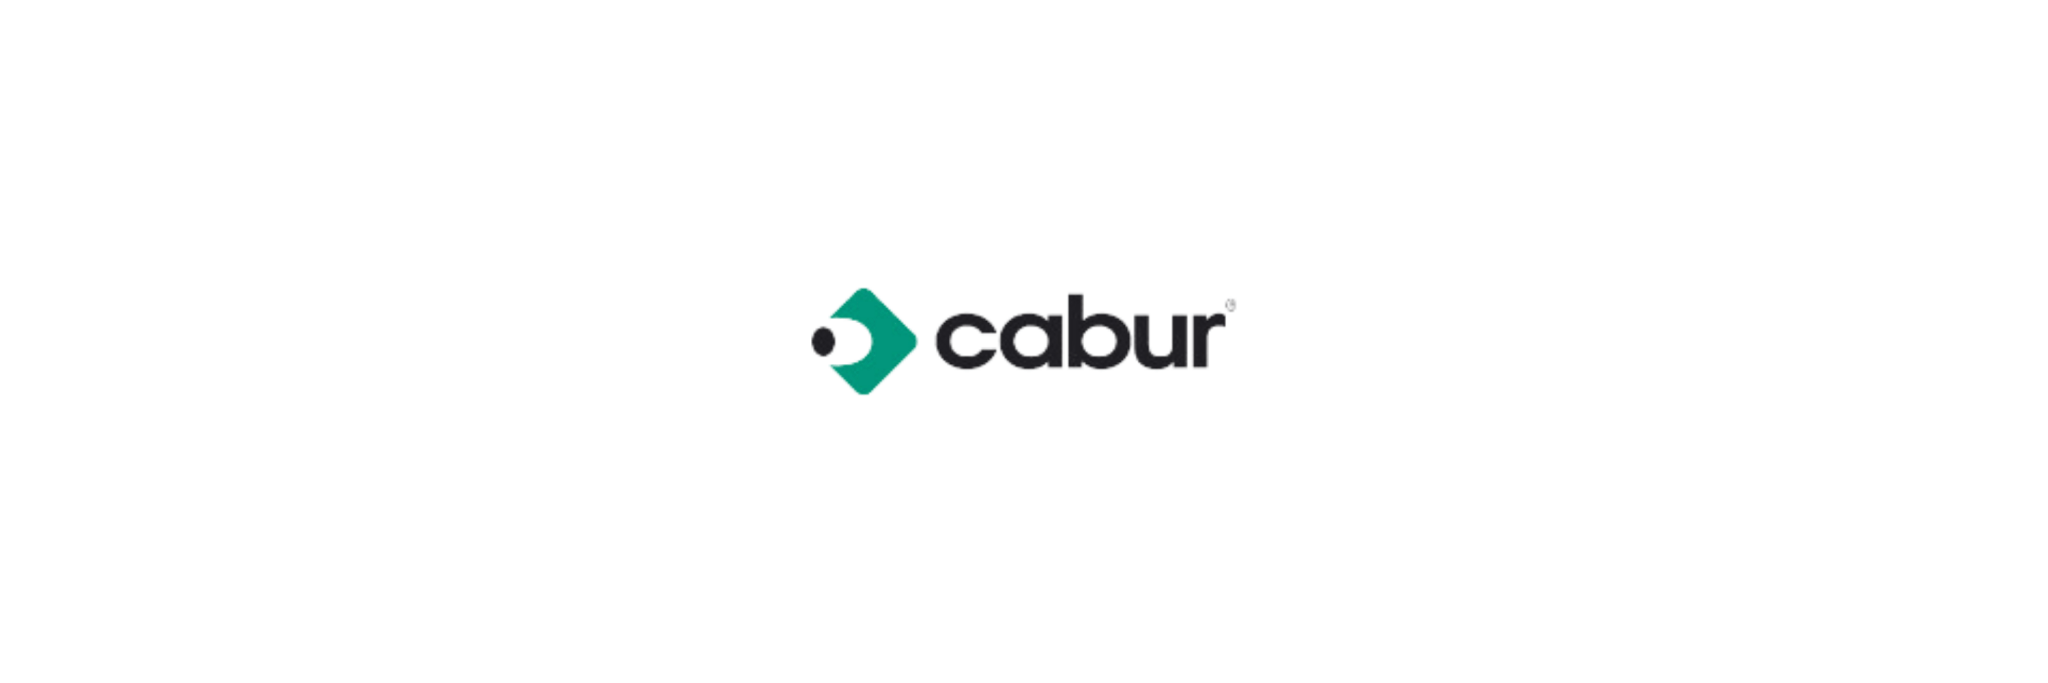 Cabur - Klenk Maschinenhandel